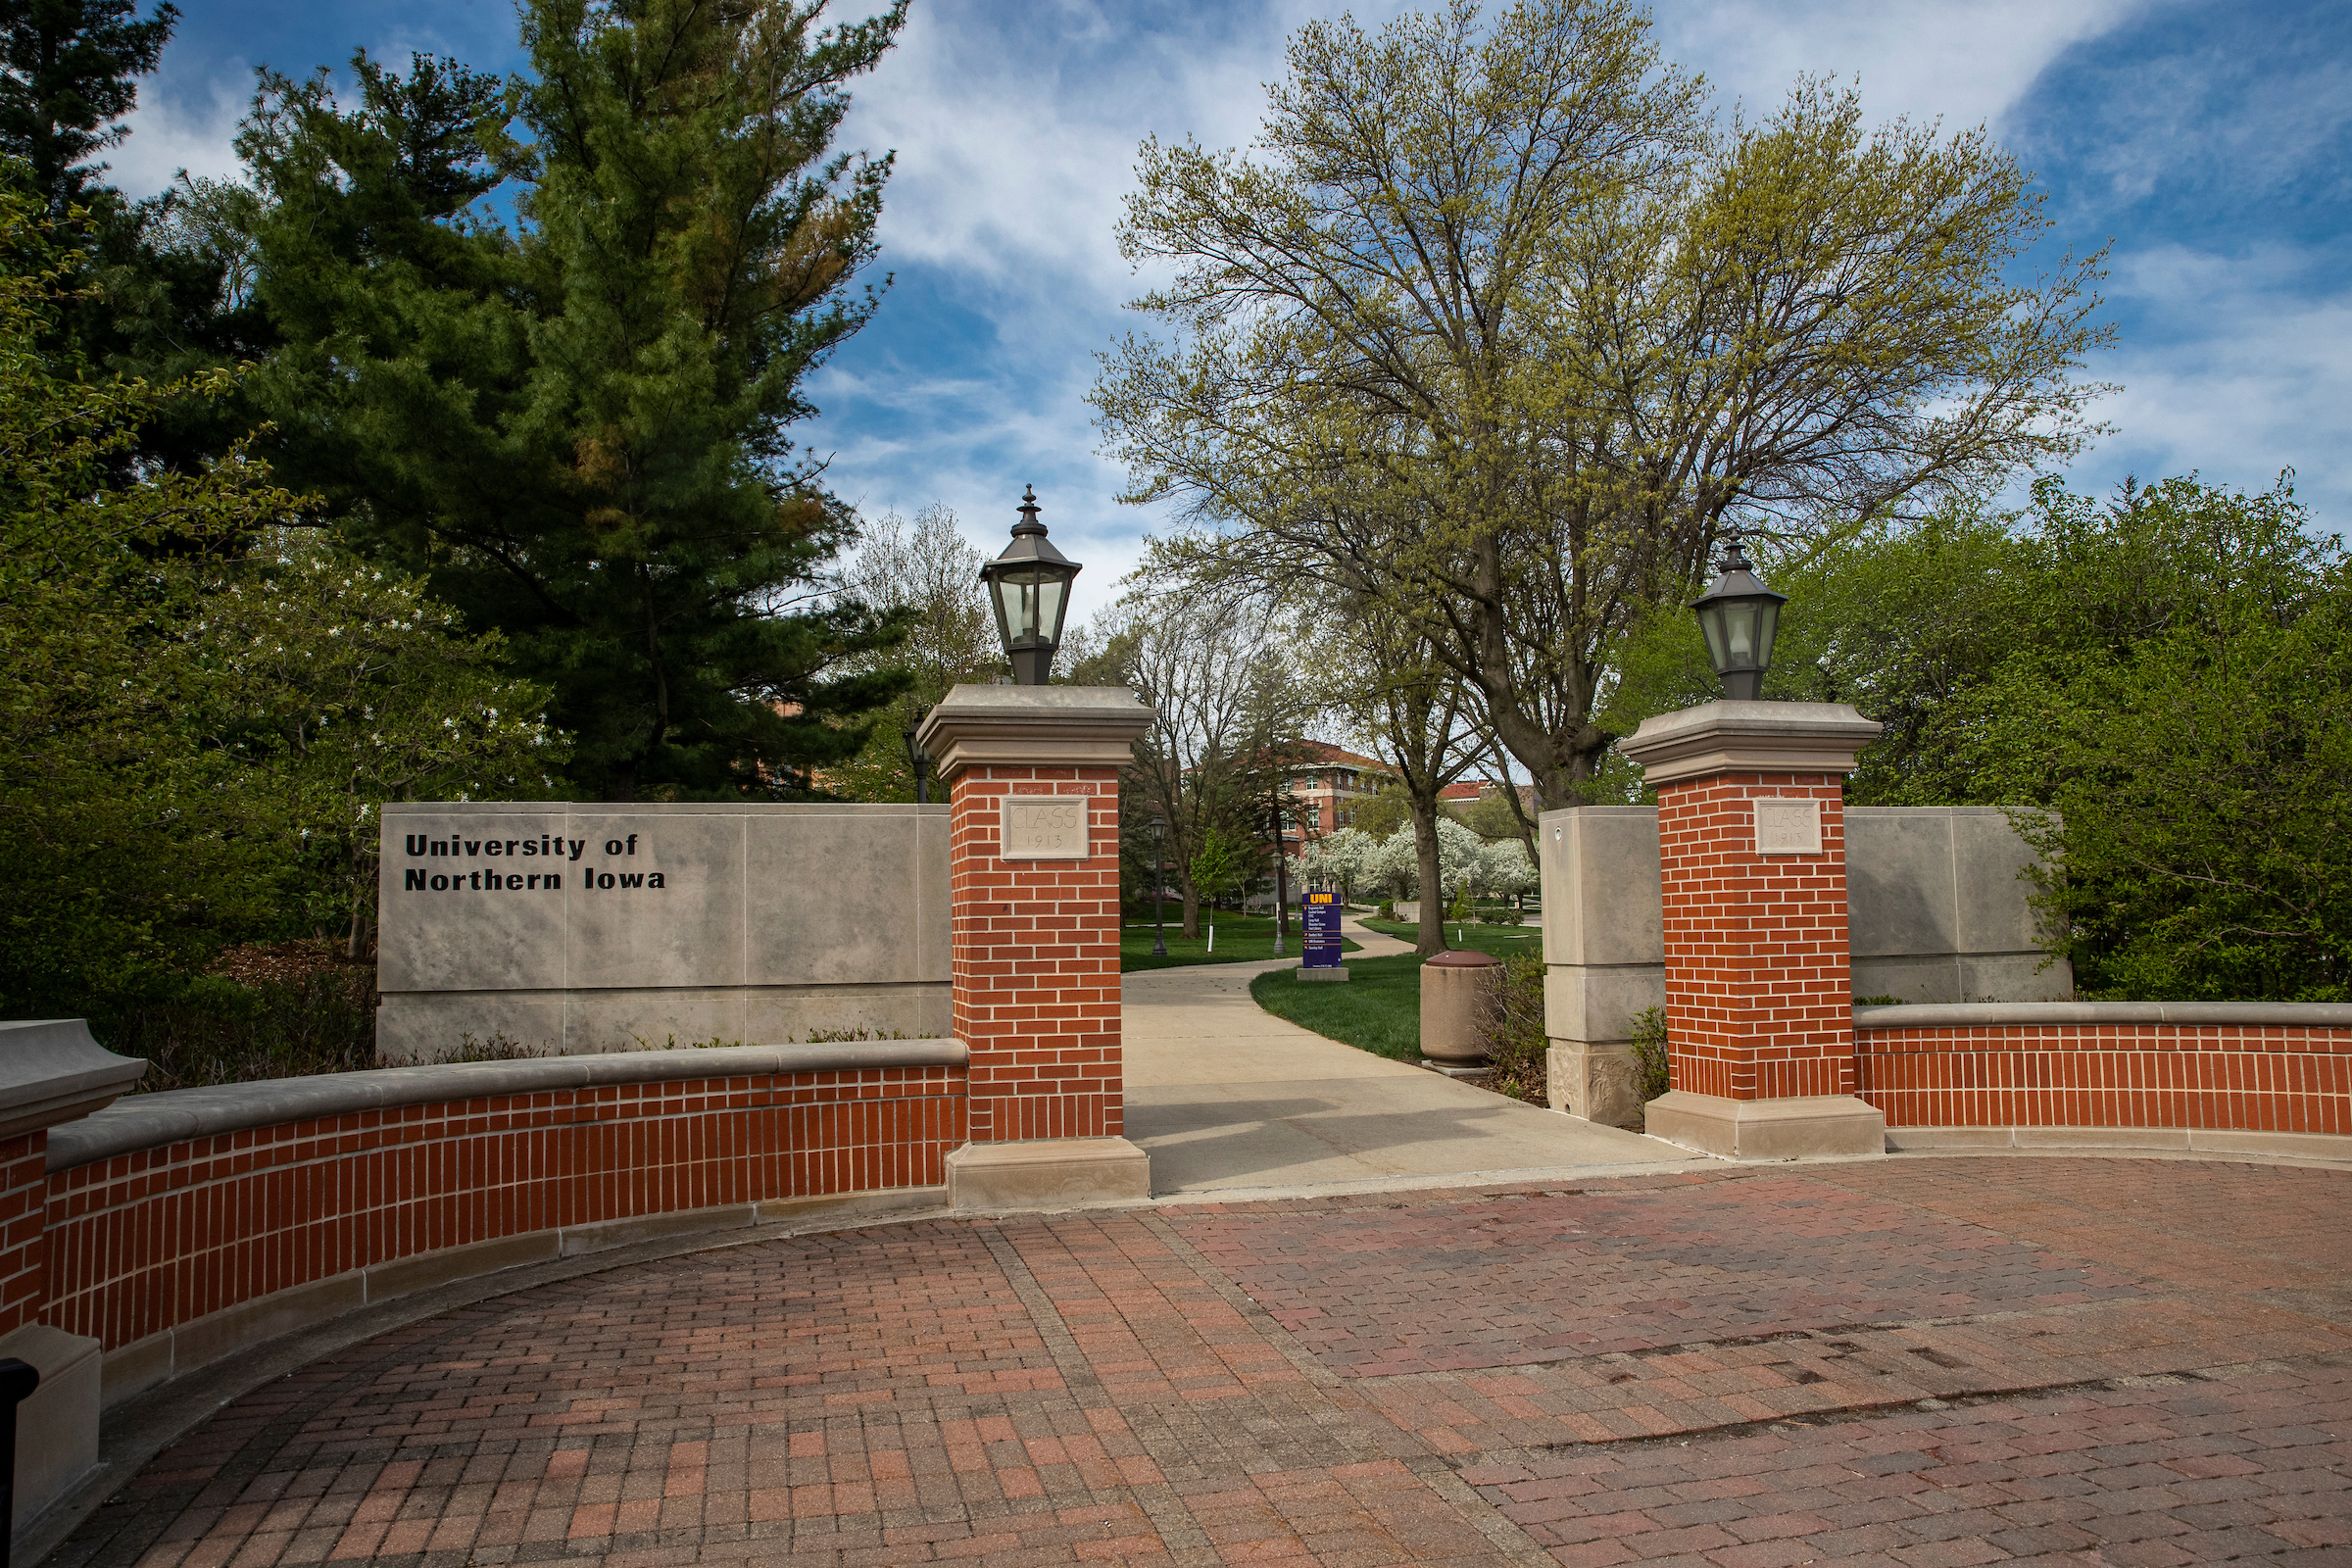 University of Northern Iowa campus - campus entrance